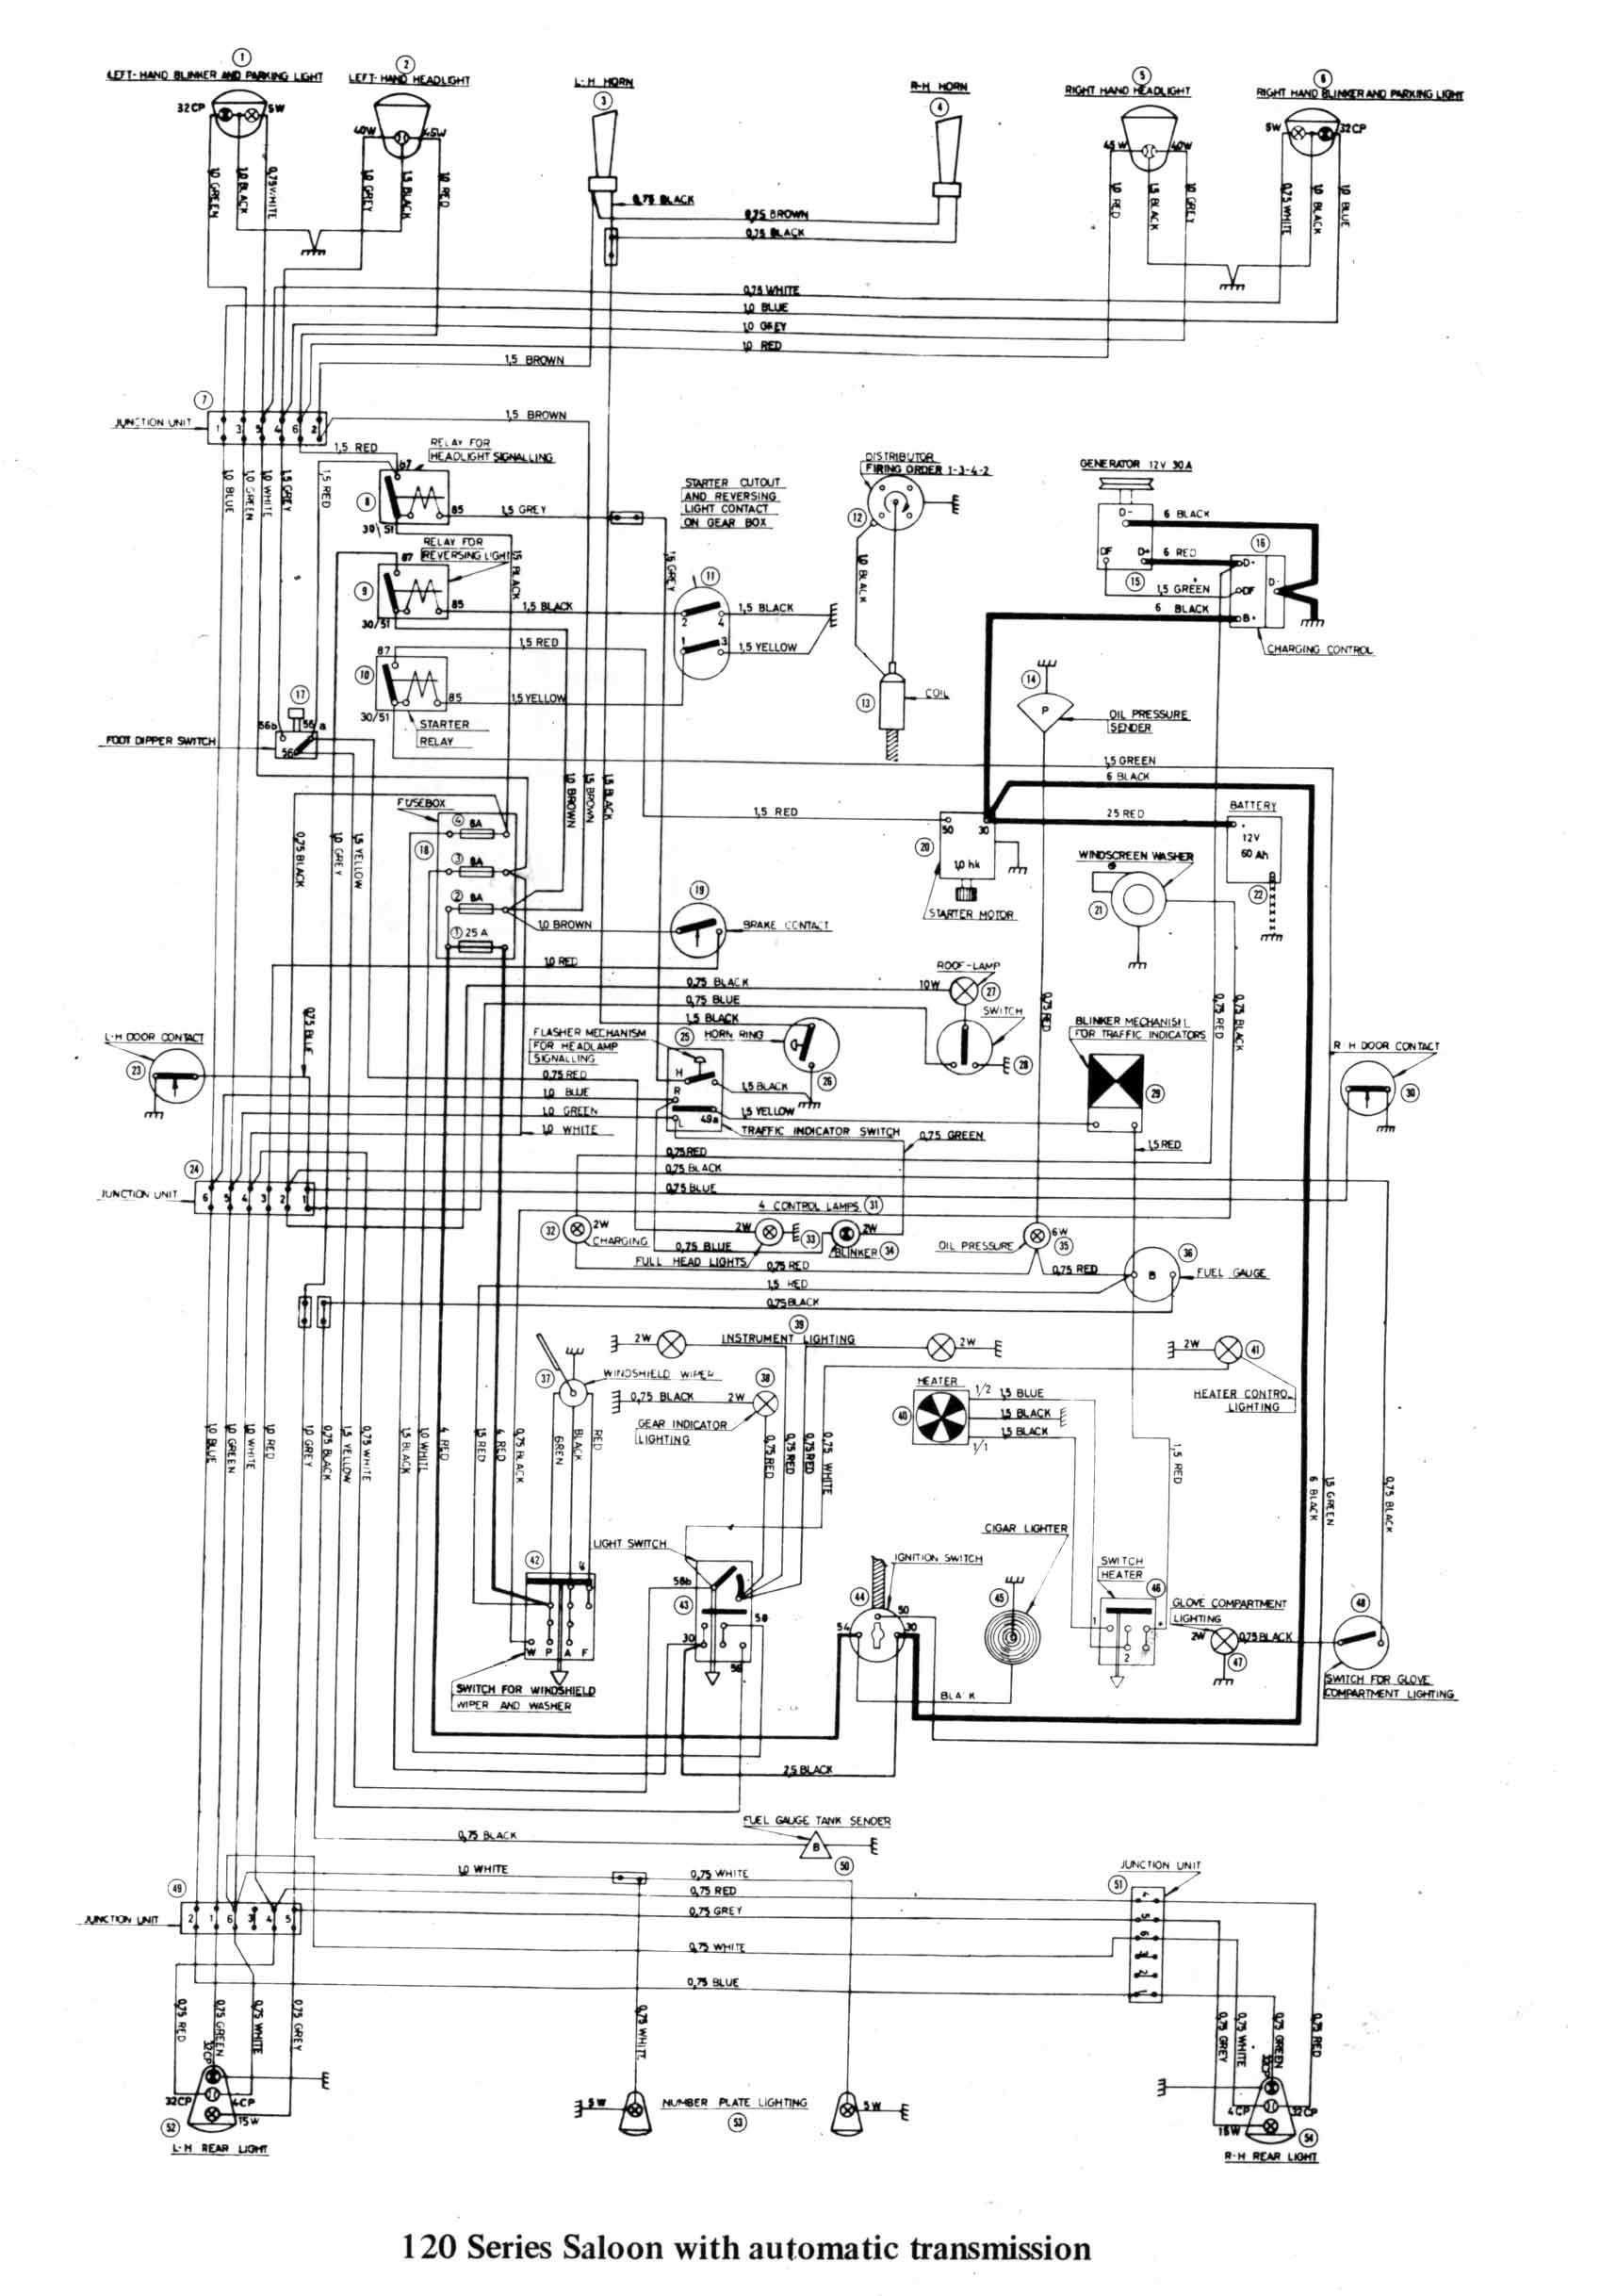 Gas solenoid Valve Wiring Diagram Free Downloads solenoid Wiring Diagram Awesome Sw Em Od Retrofitting A